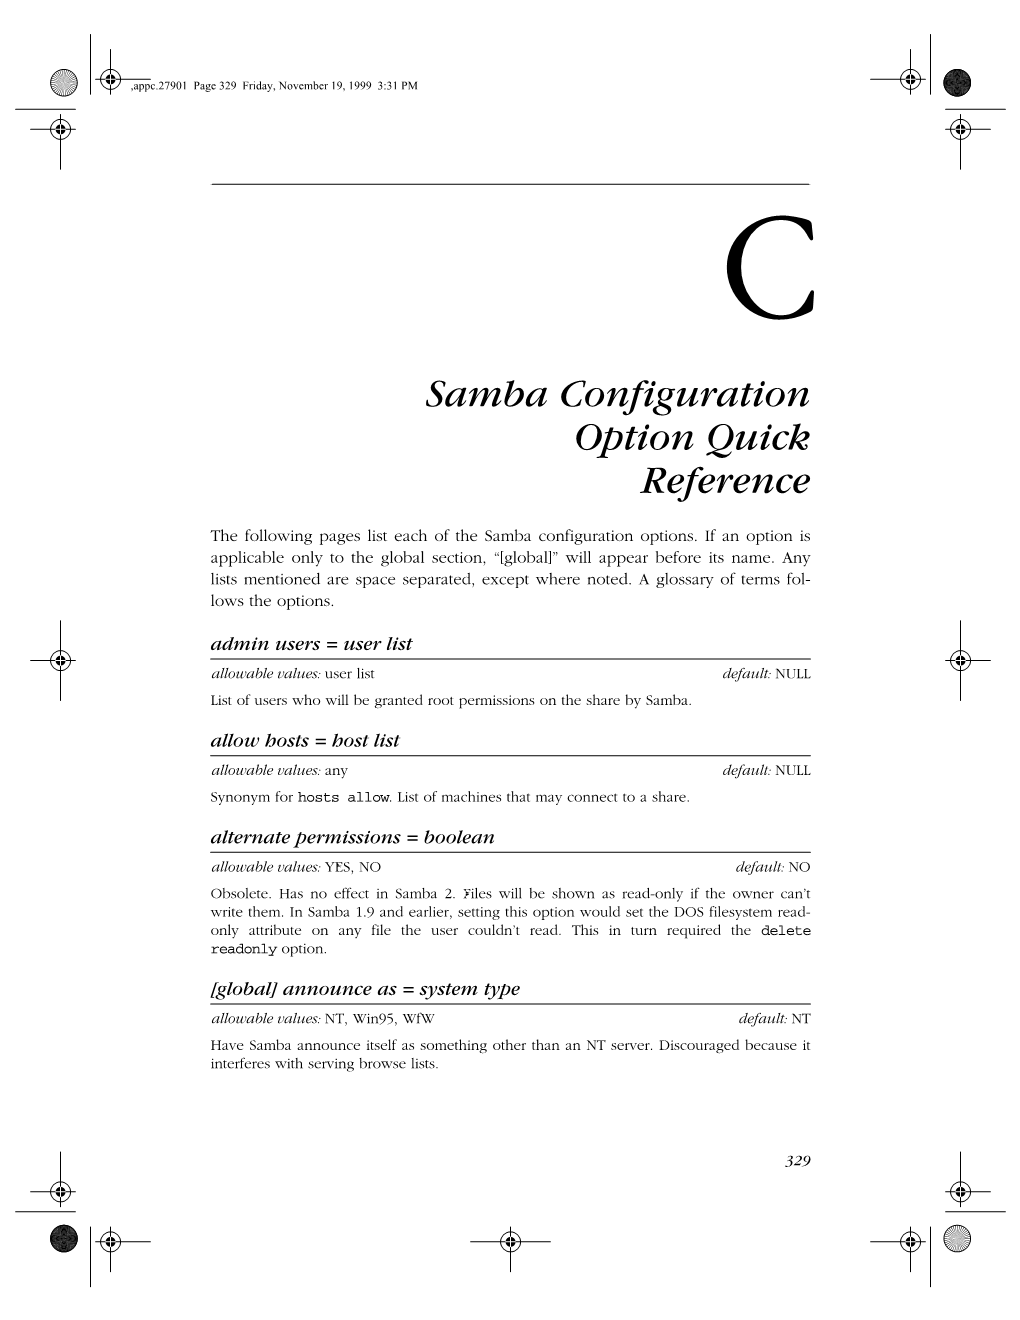 Appendix C: Samba Configuration Option Quick Reference